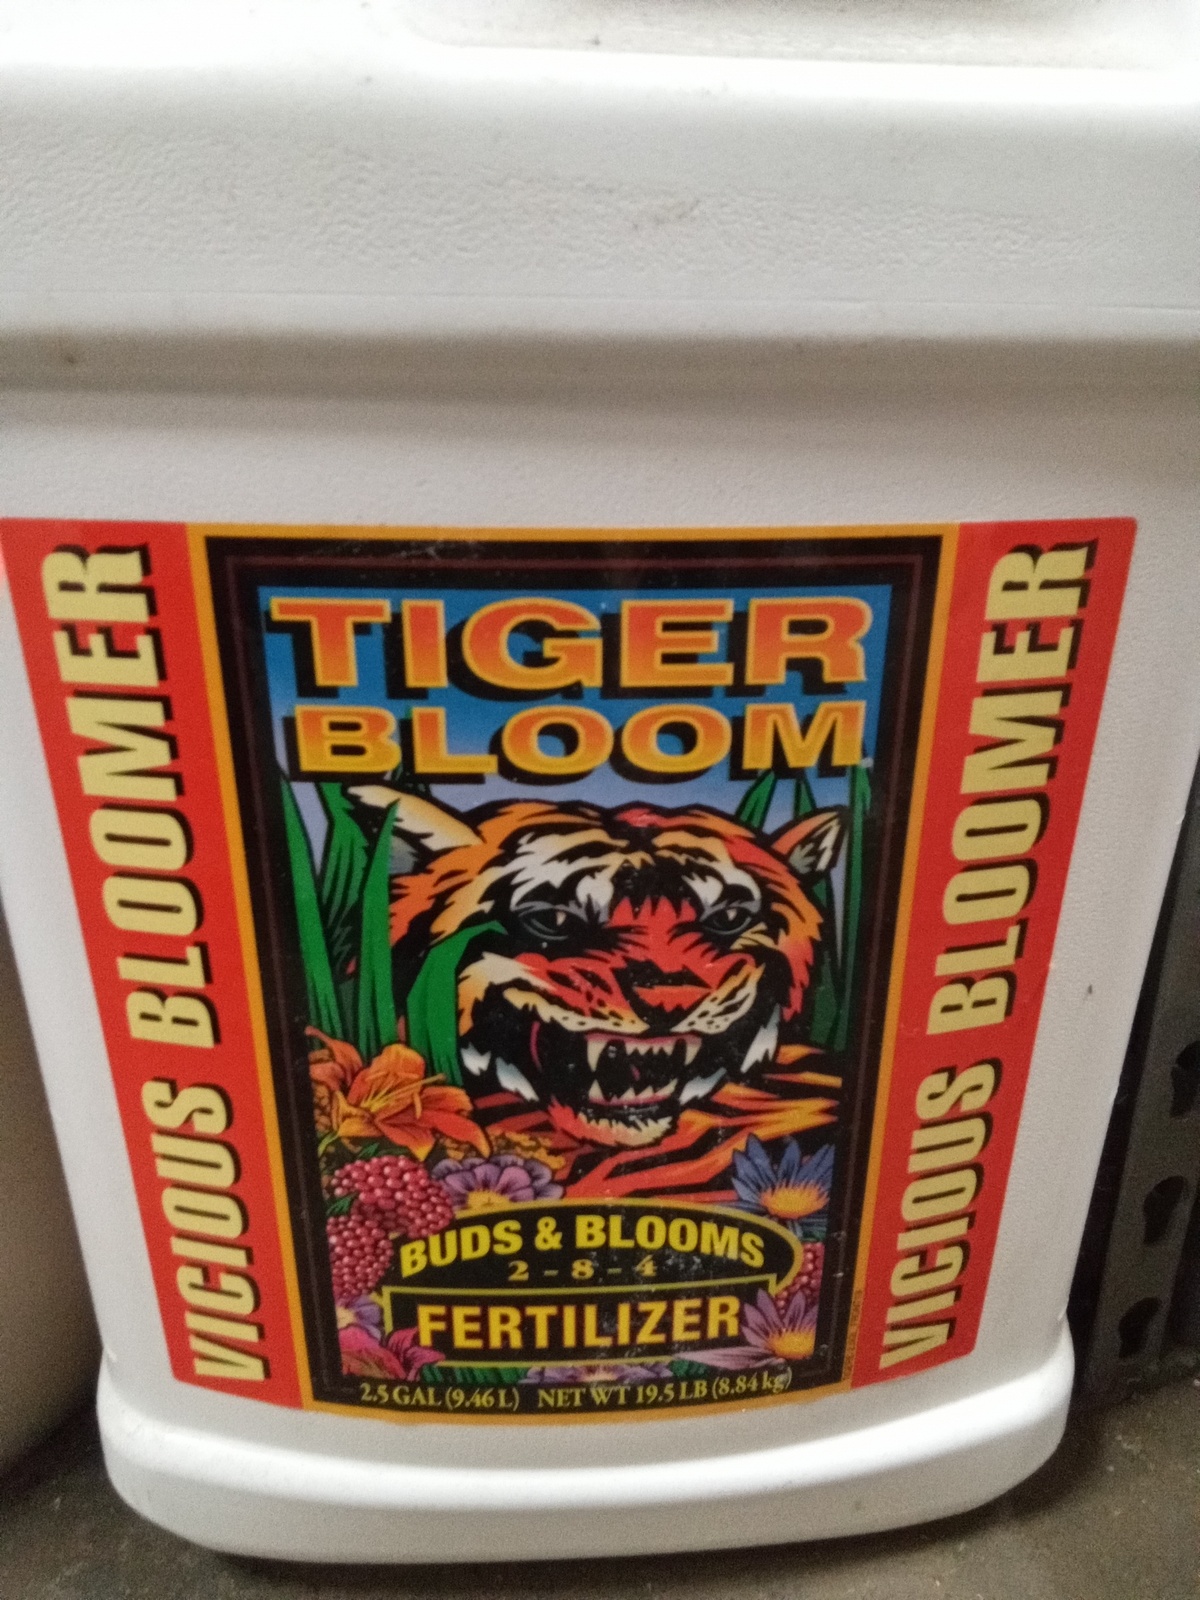 Primary image for Tiger Bloom Bud and Bloom 2-8-4 Fertilizer 2.5 gallon 662kb